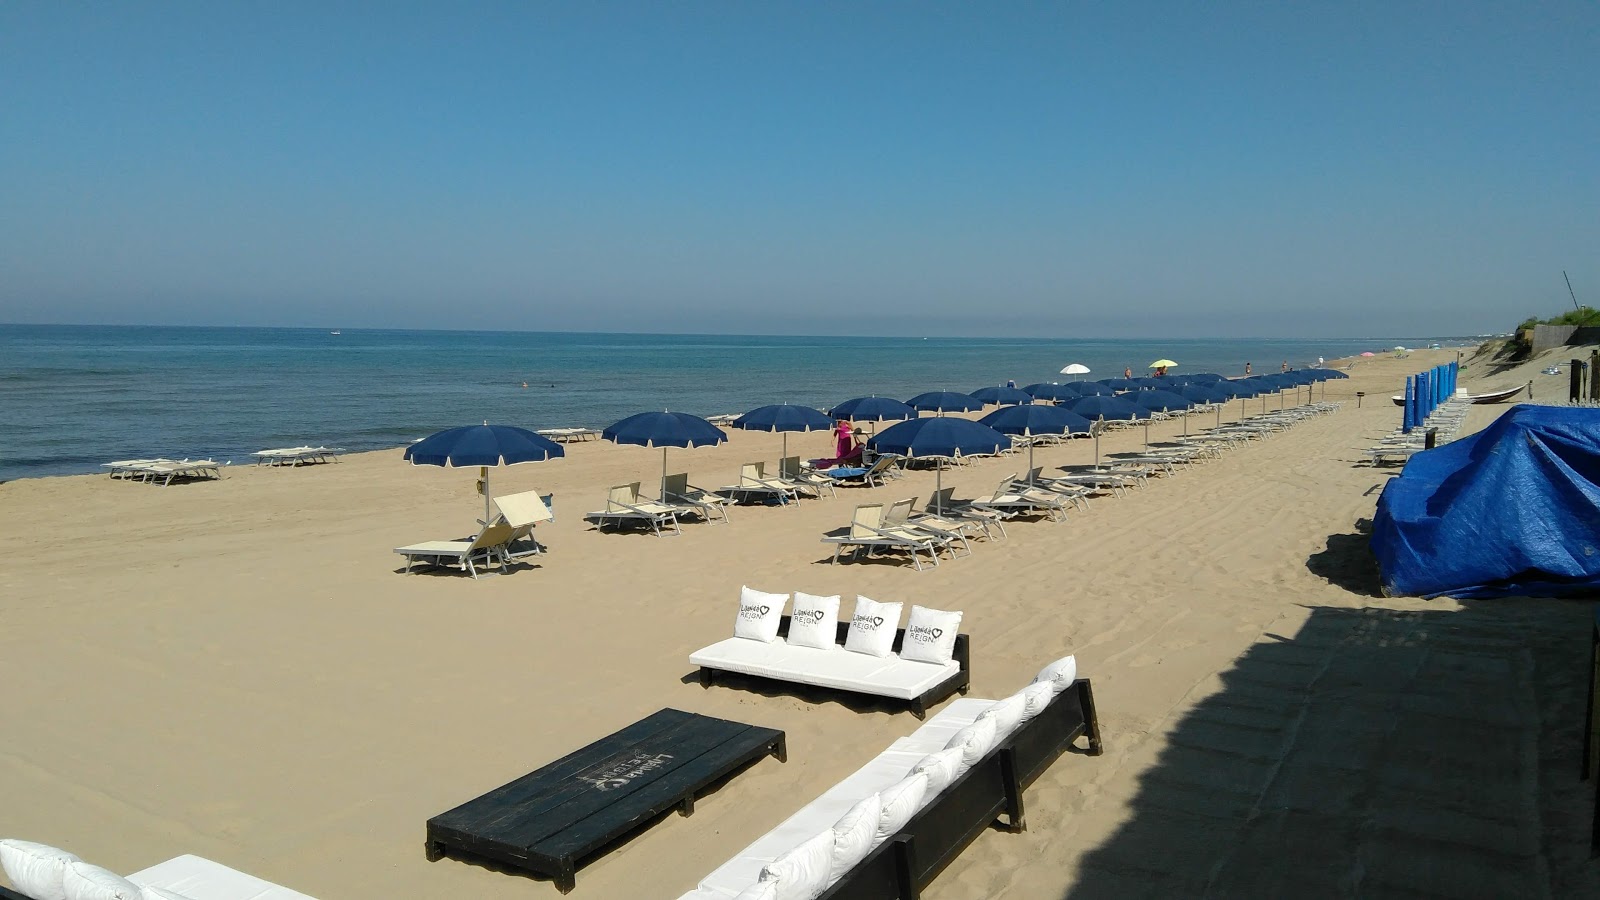 Photo of Spiaggia di Sabaudia amenities area